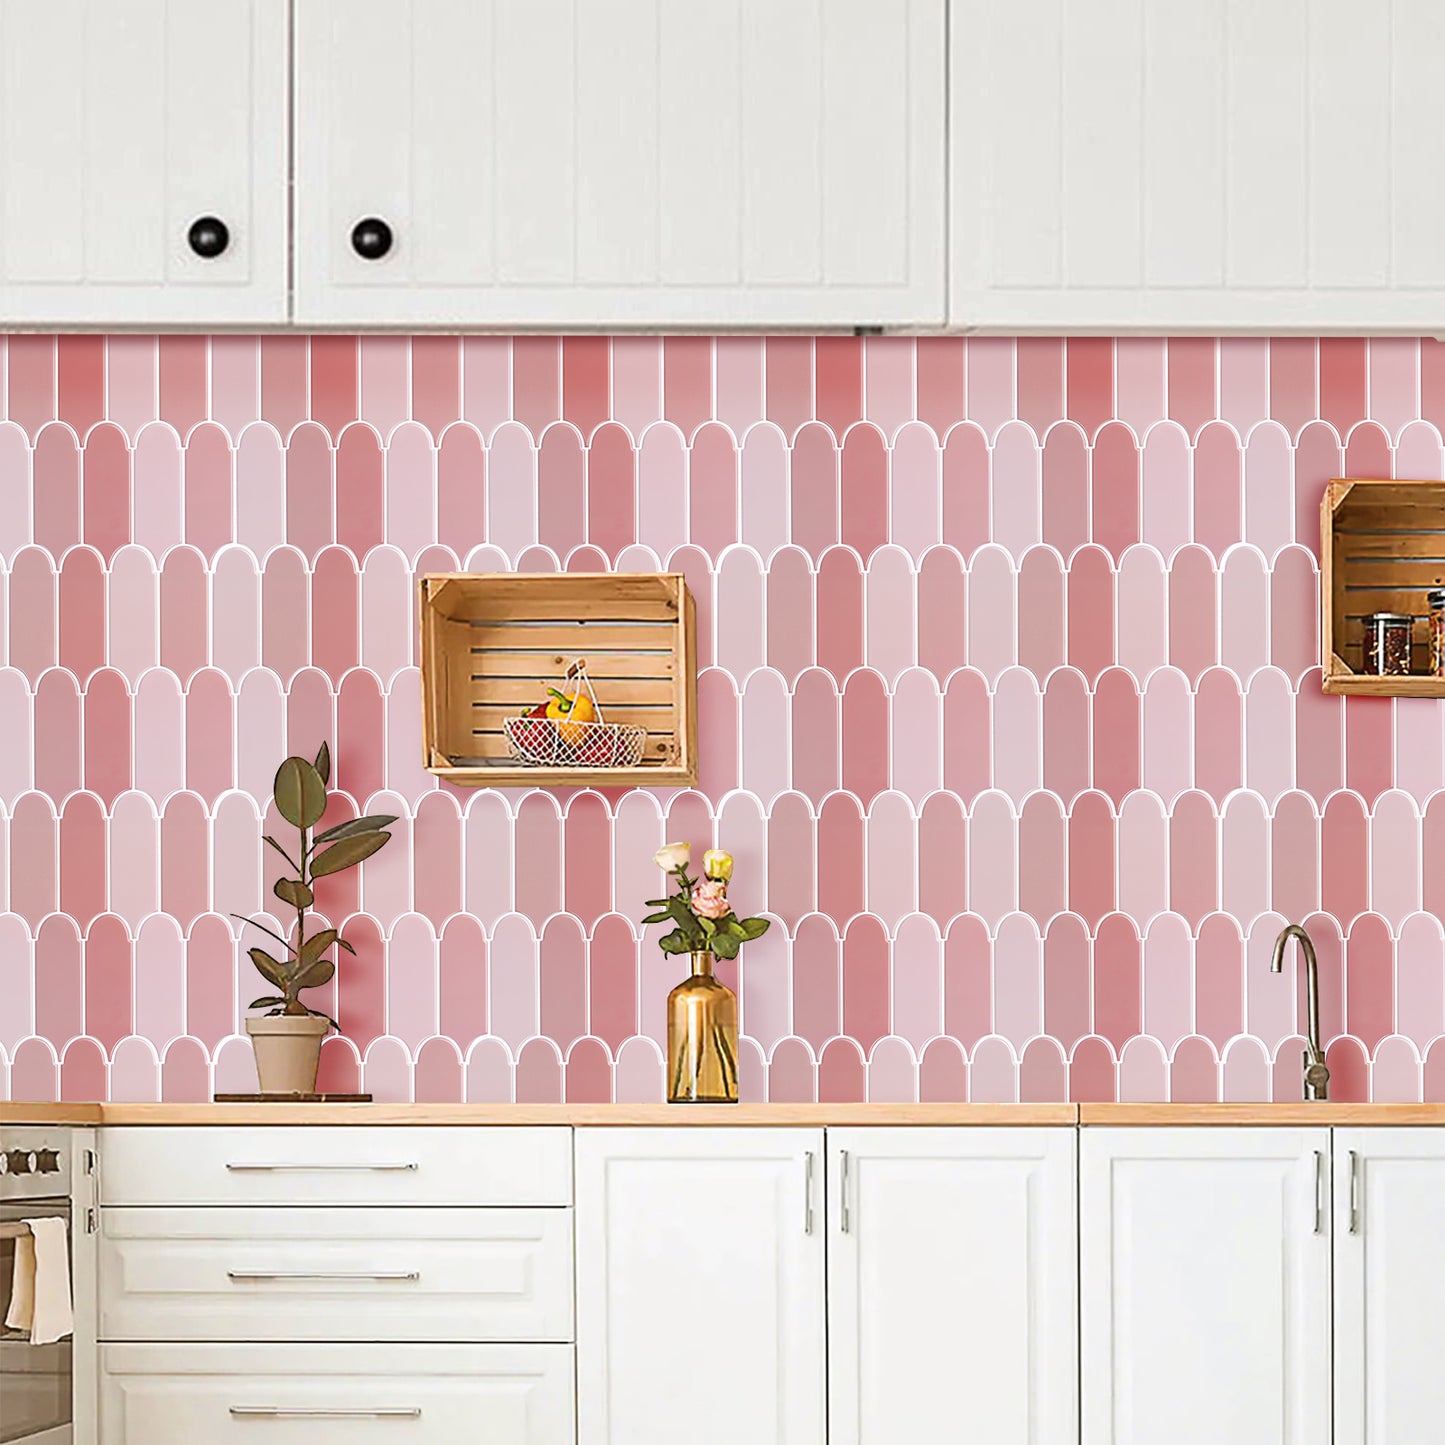 10-Sheet Mosaic Tiles Peel and Stick Backsplash Kitchen  2.5mm Thicker Design - Coral